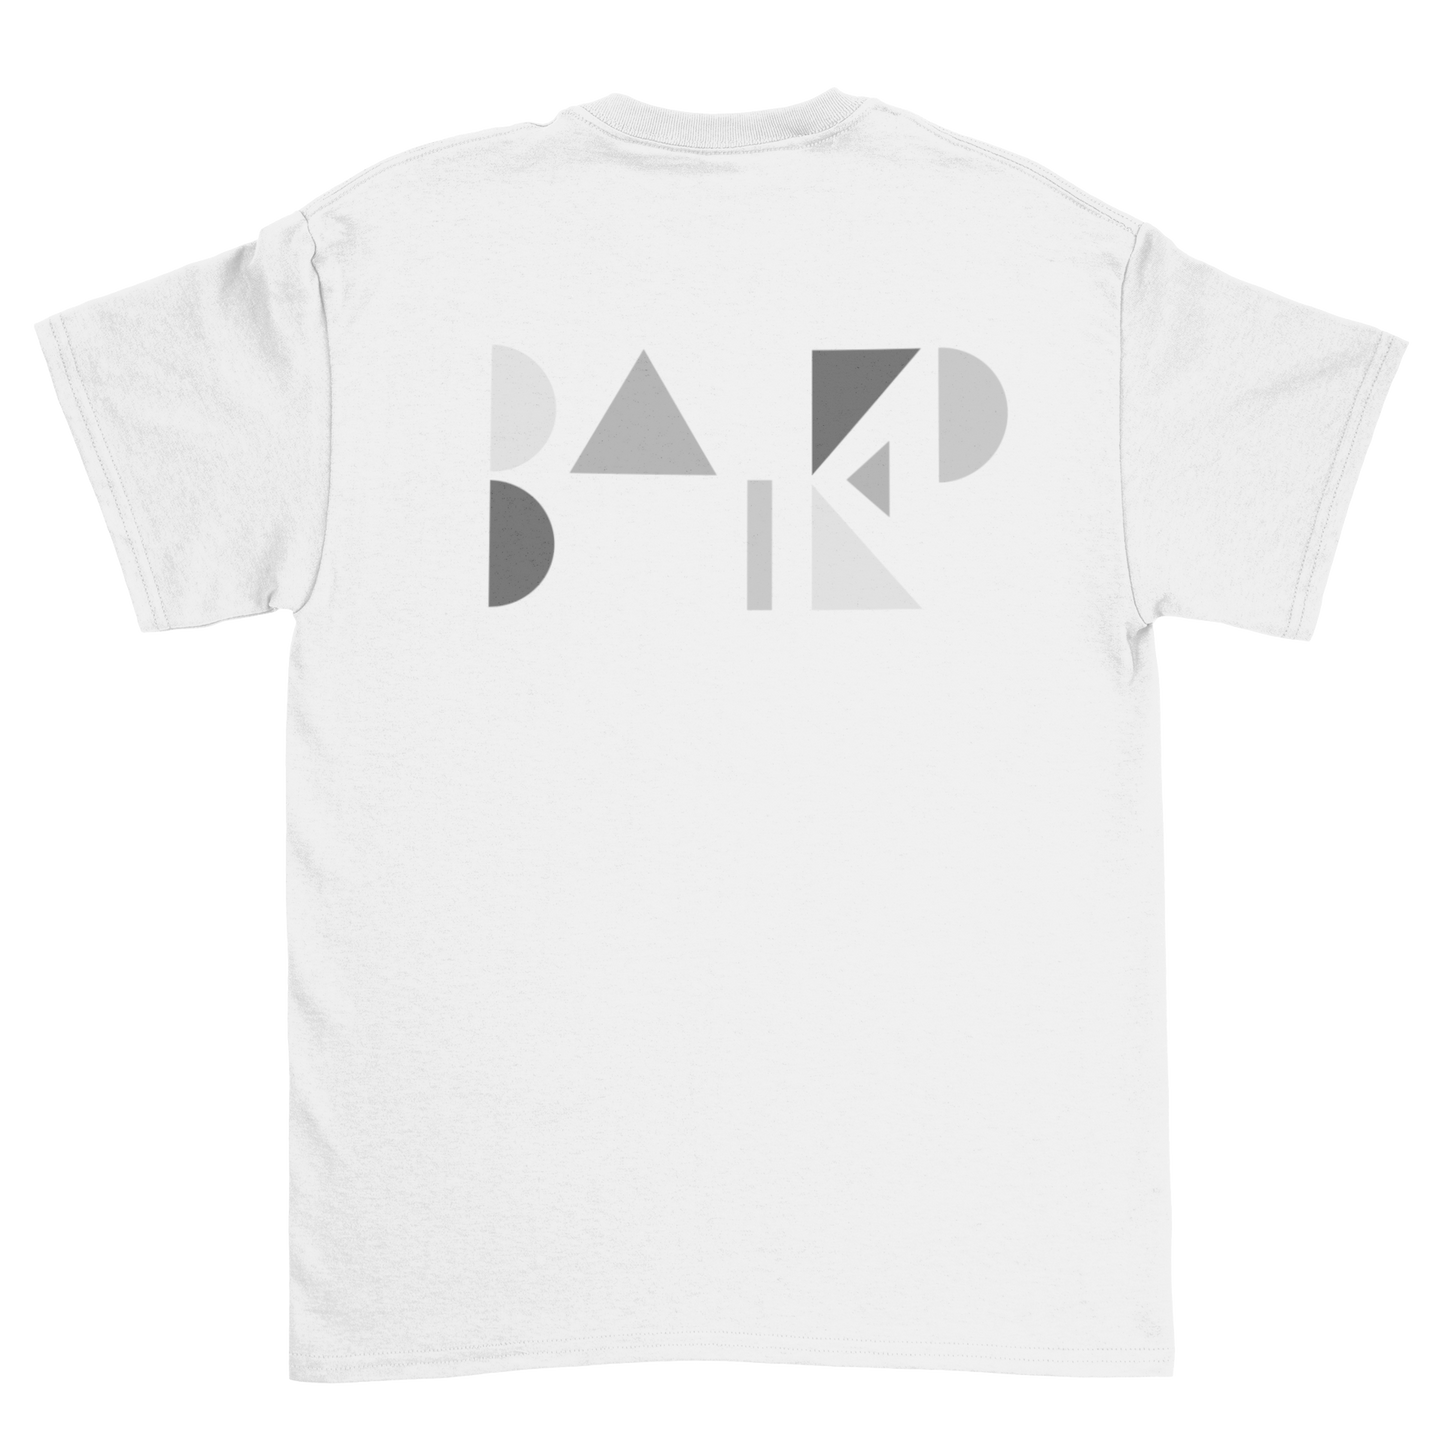 BAfEP Linz - Organic T-Shirt - Hell